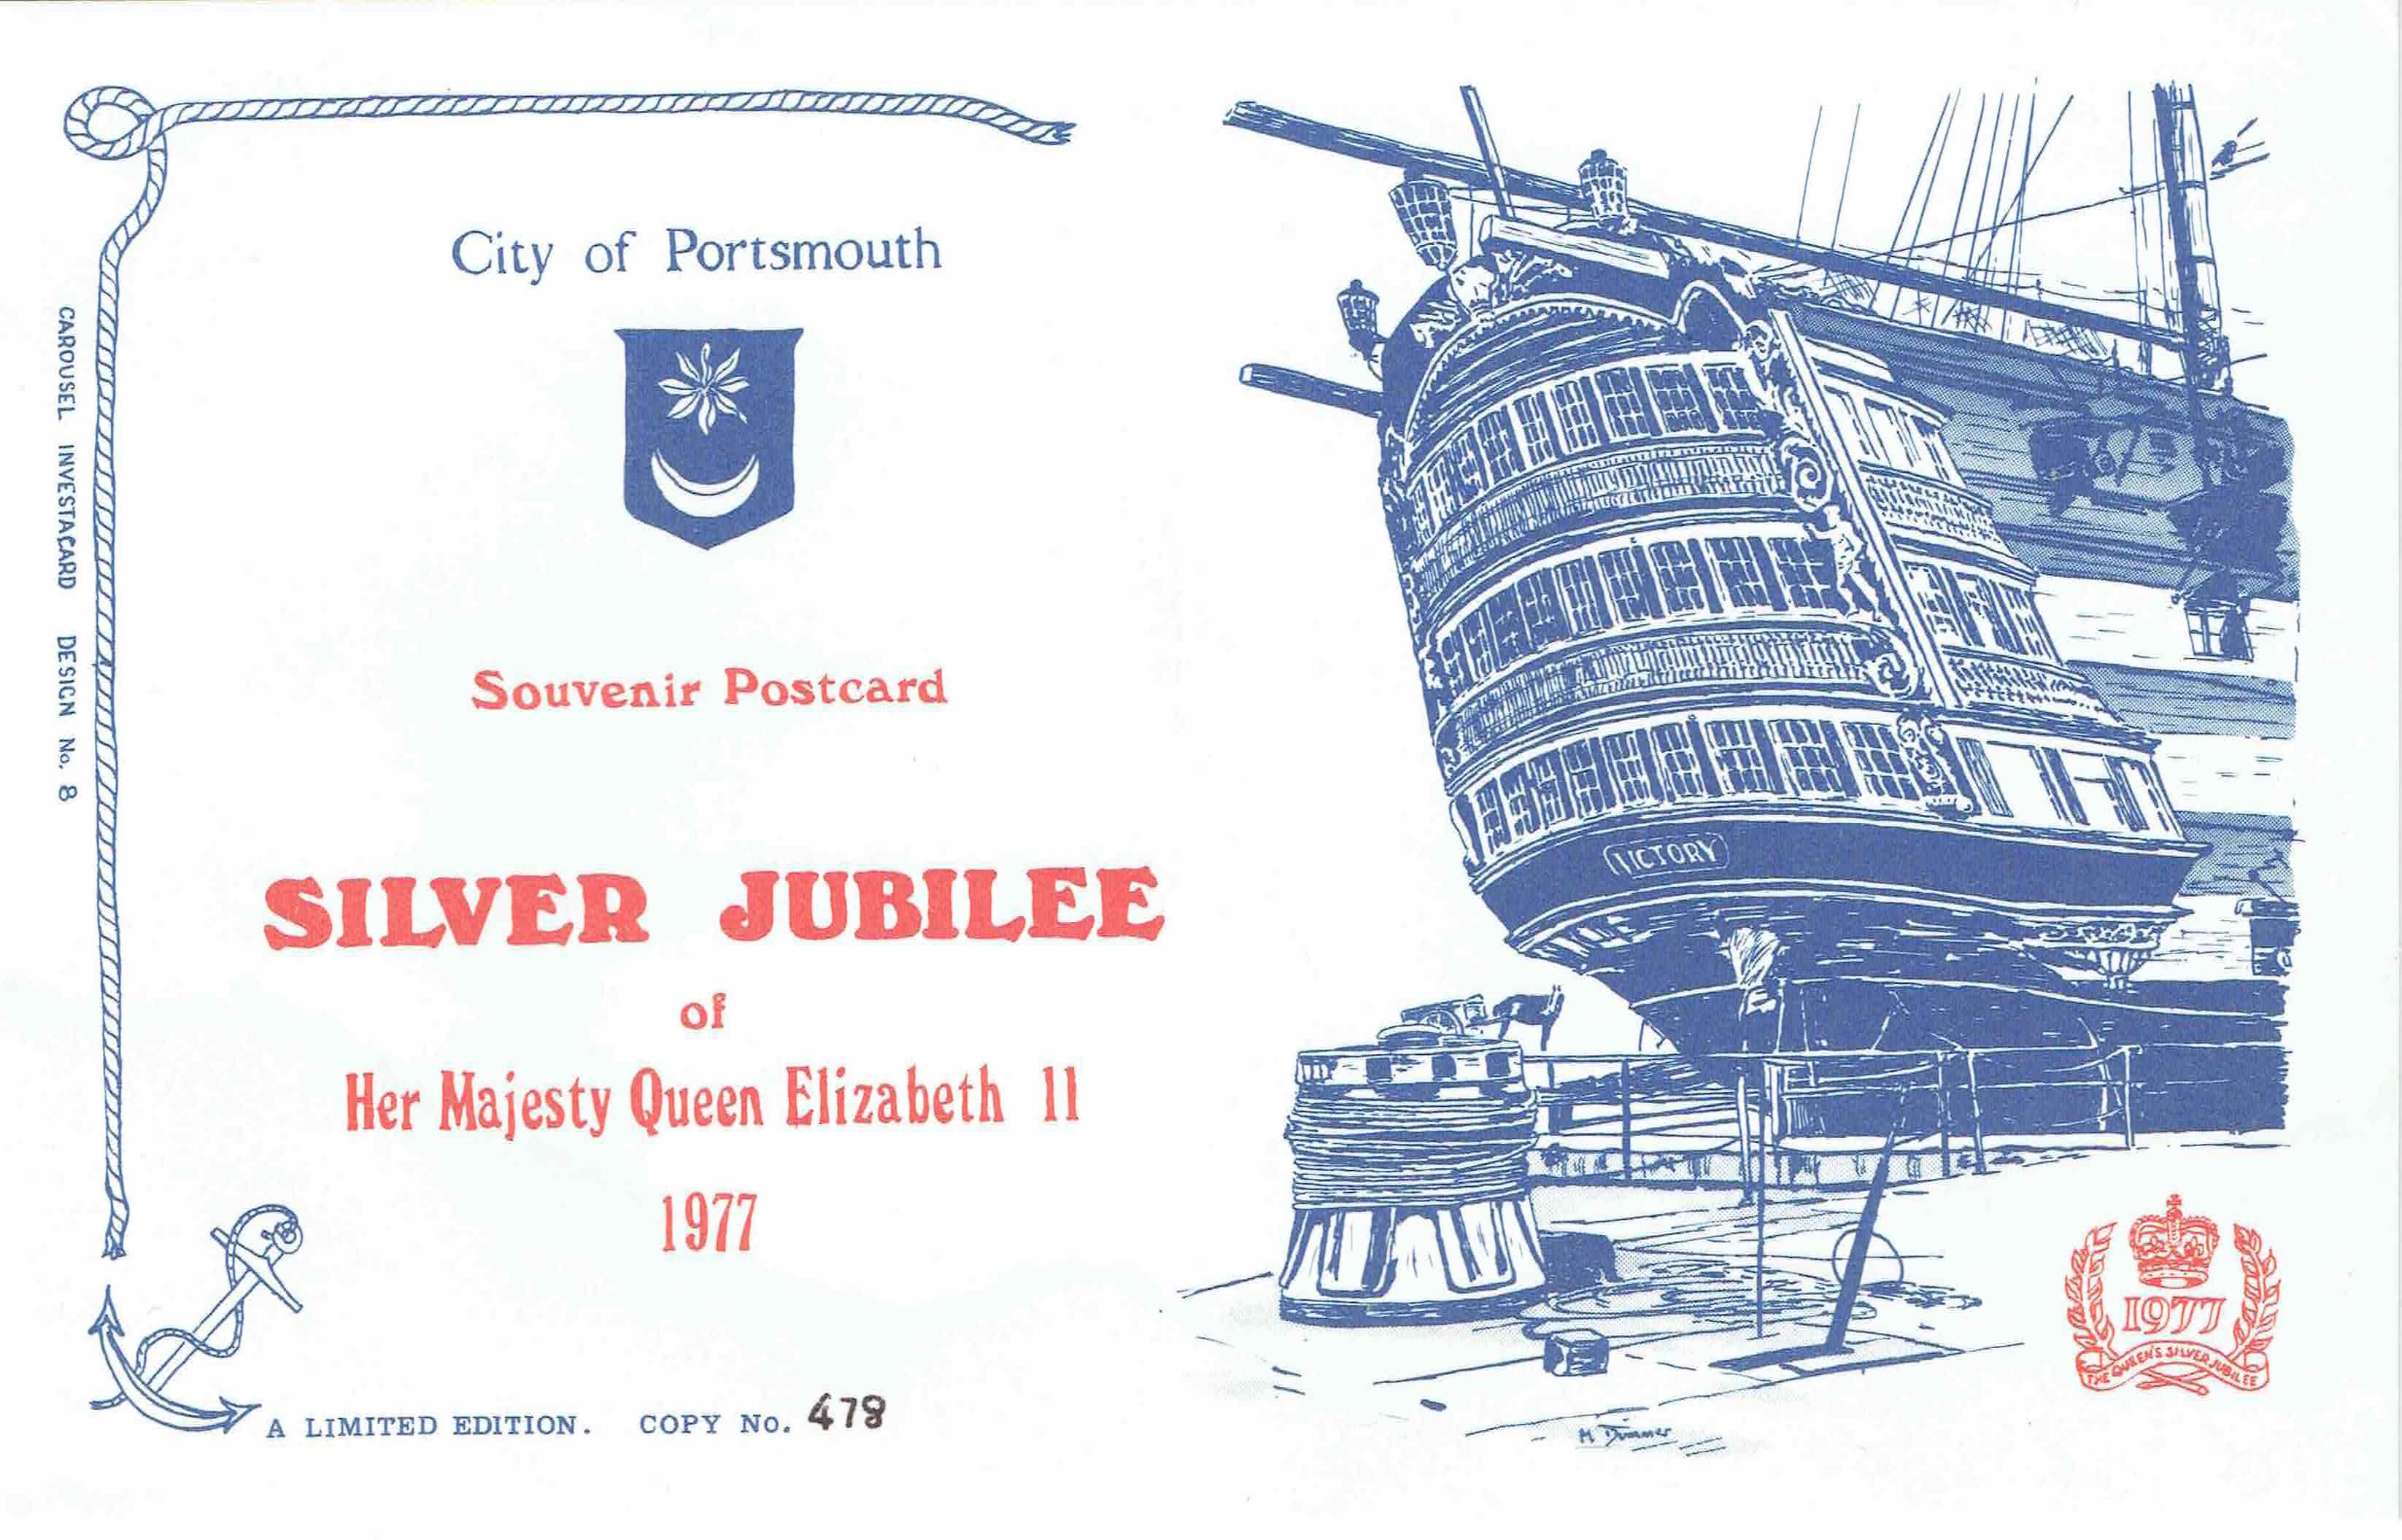 City of Portsmouth, Souvenir Postcard, 1977